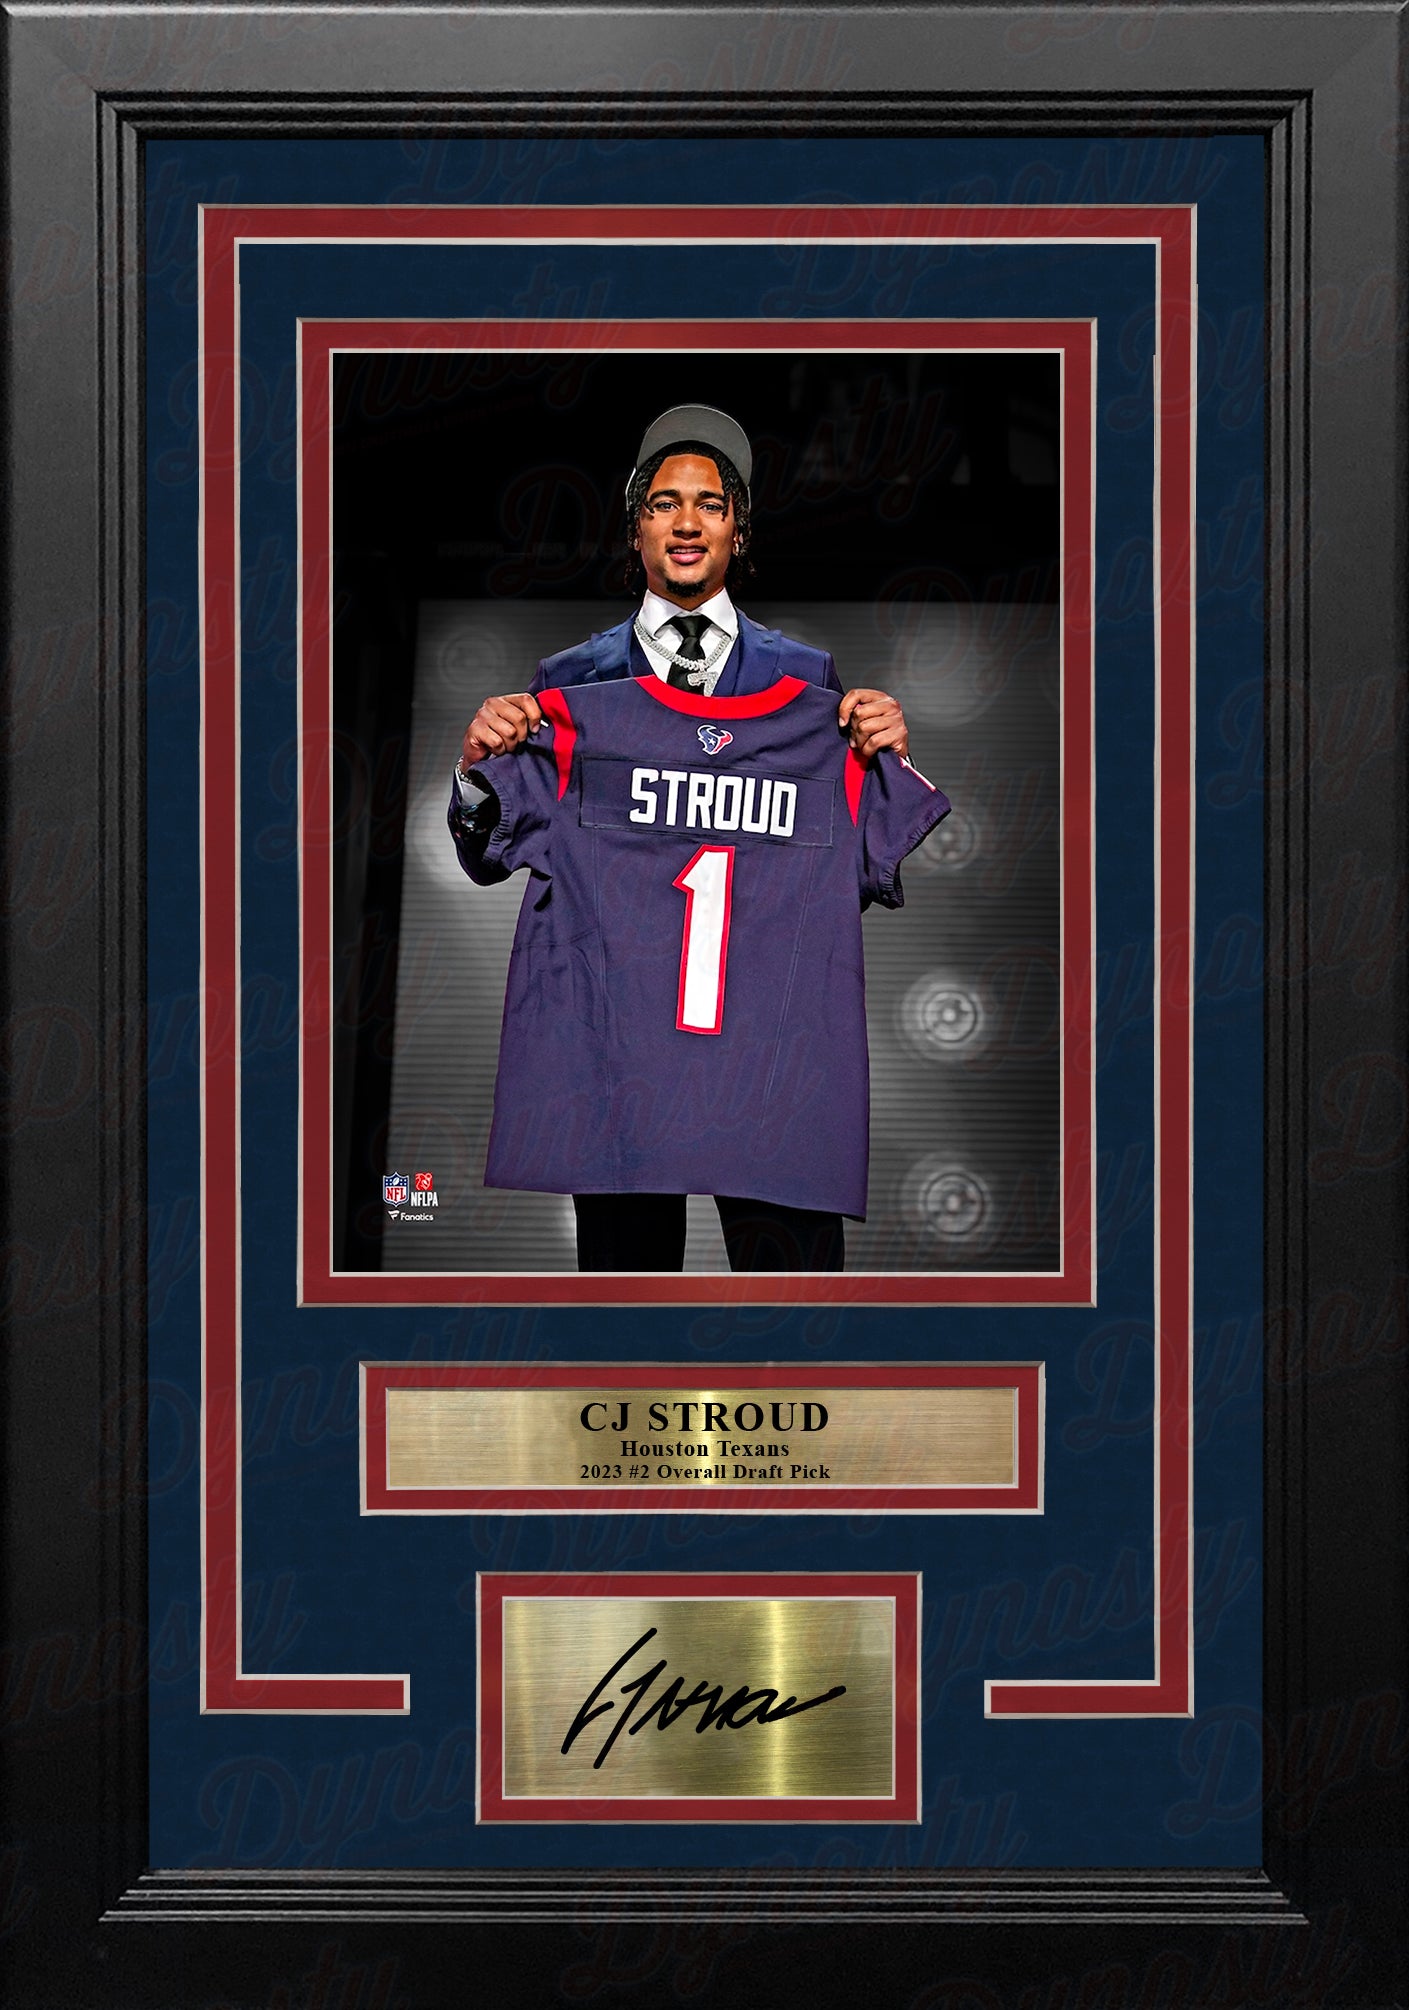 CJ Stroud Houston Texans 8" x 10" Framed Draft Football Photo with Engraved Autograph - Dynasty Sports & Framing 